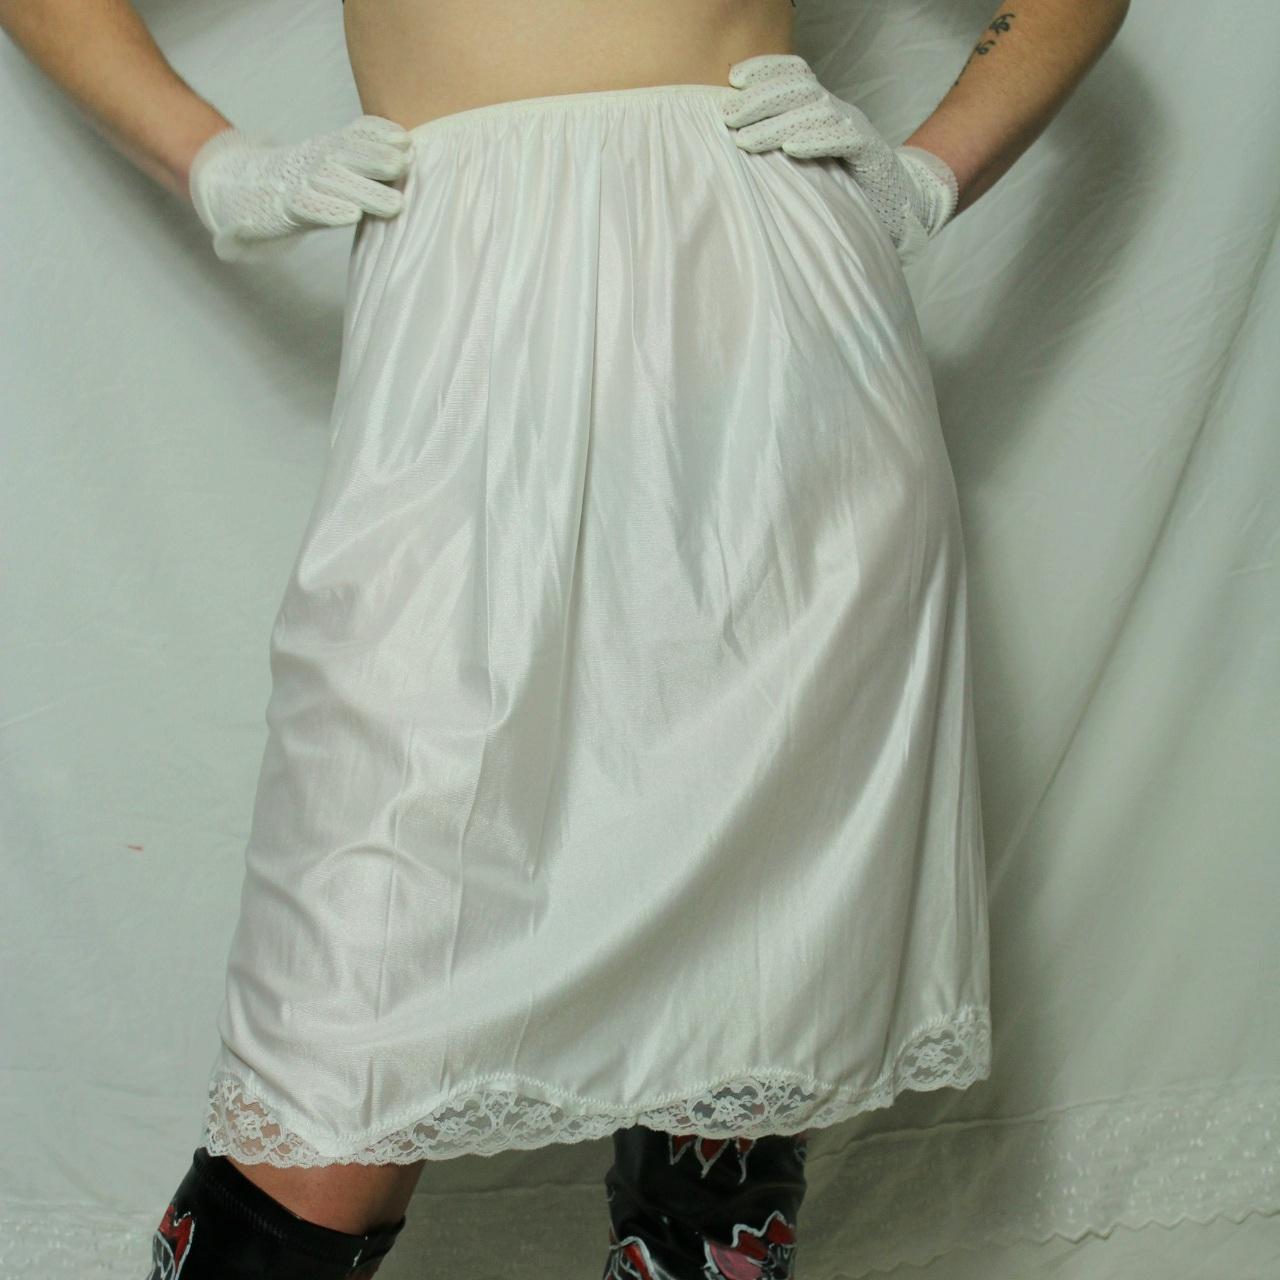 Product Image 2 - Vintage White Lace Slip Skirt.

Vintage